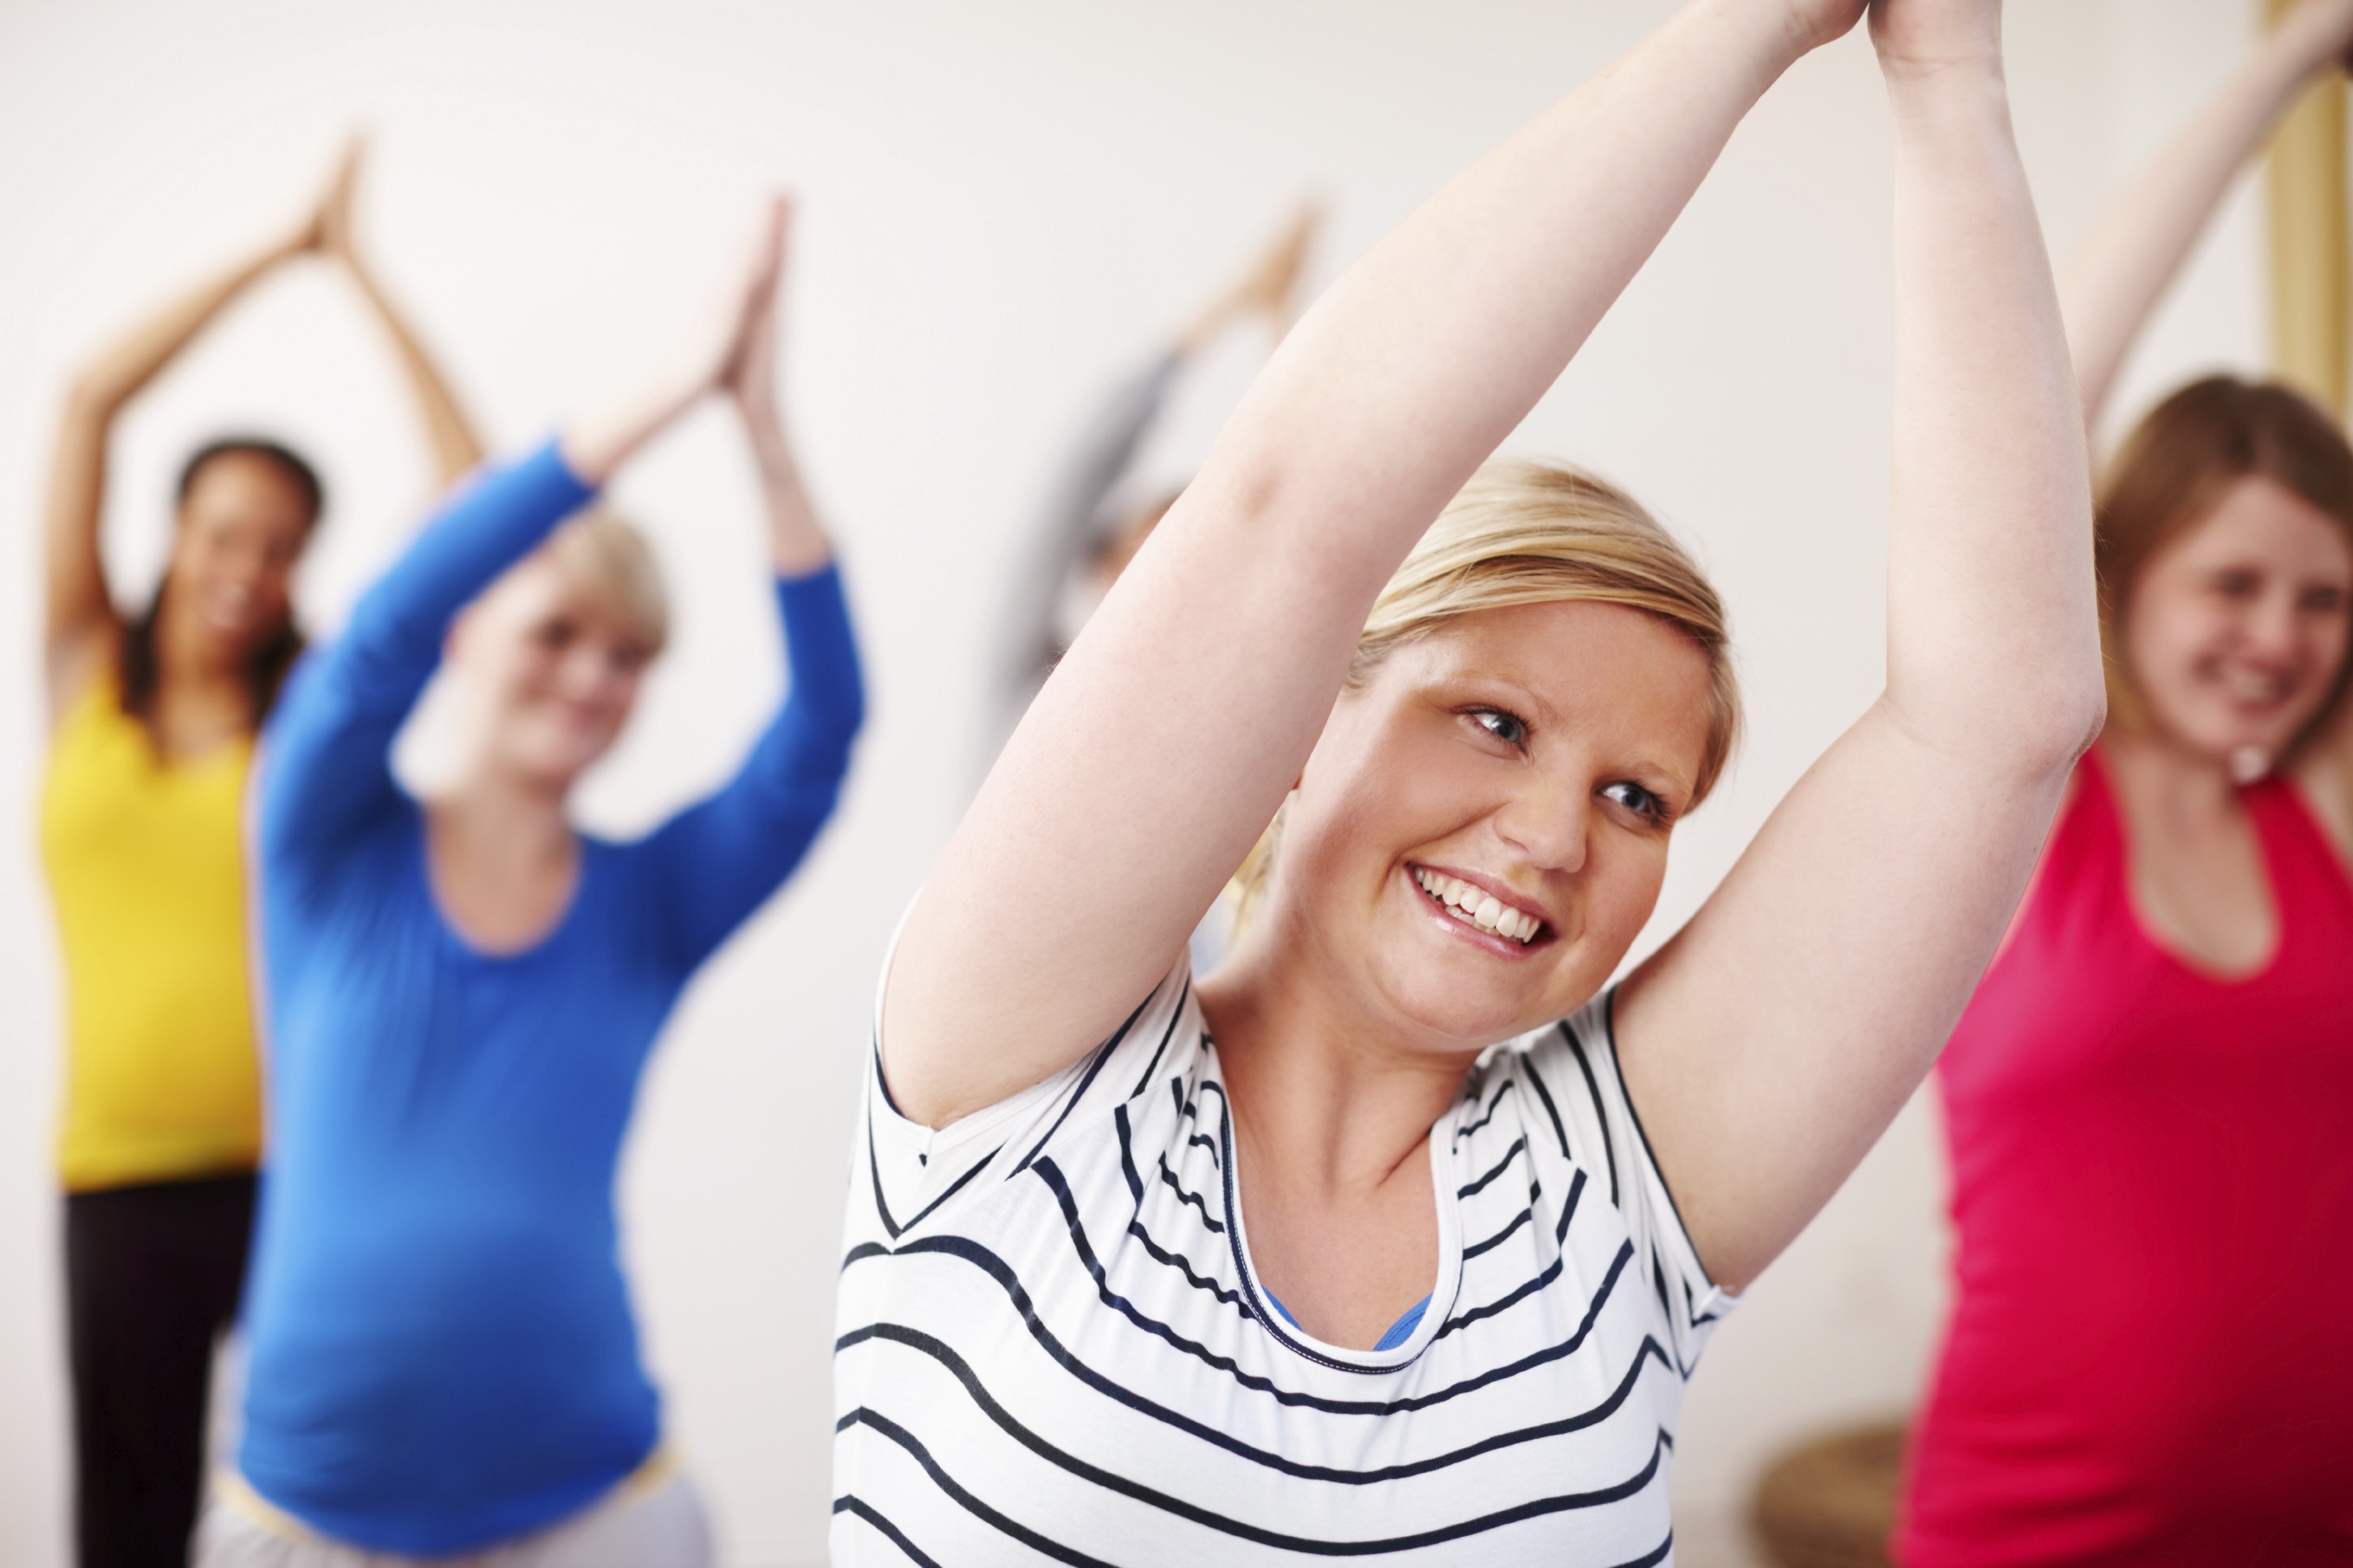 10  Benefits of Prenatal Yoga